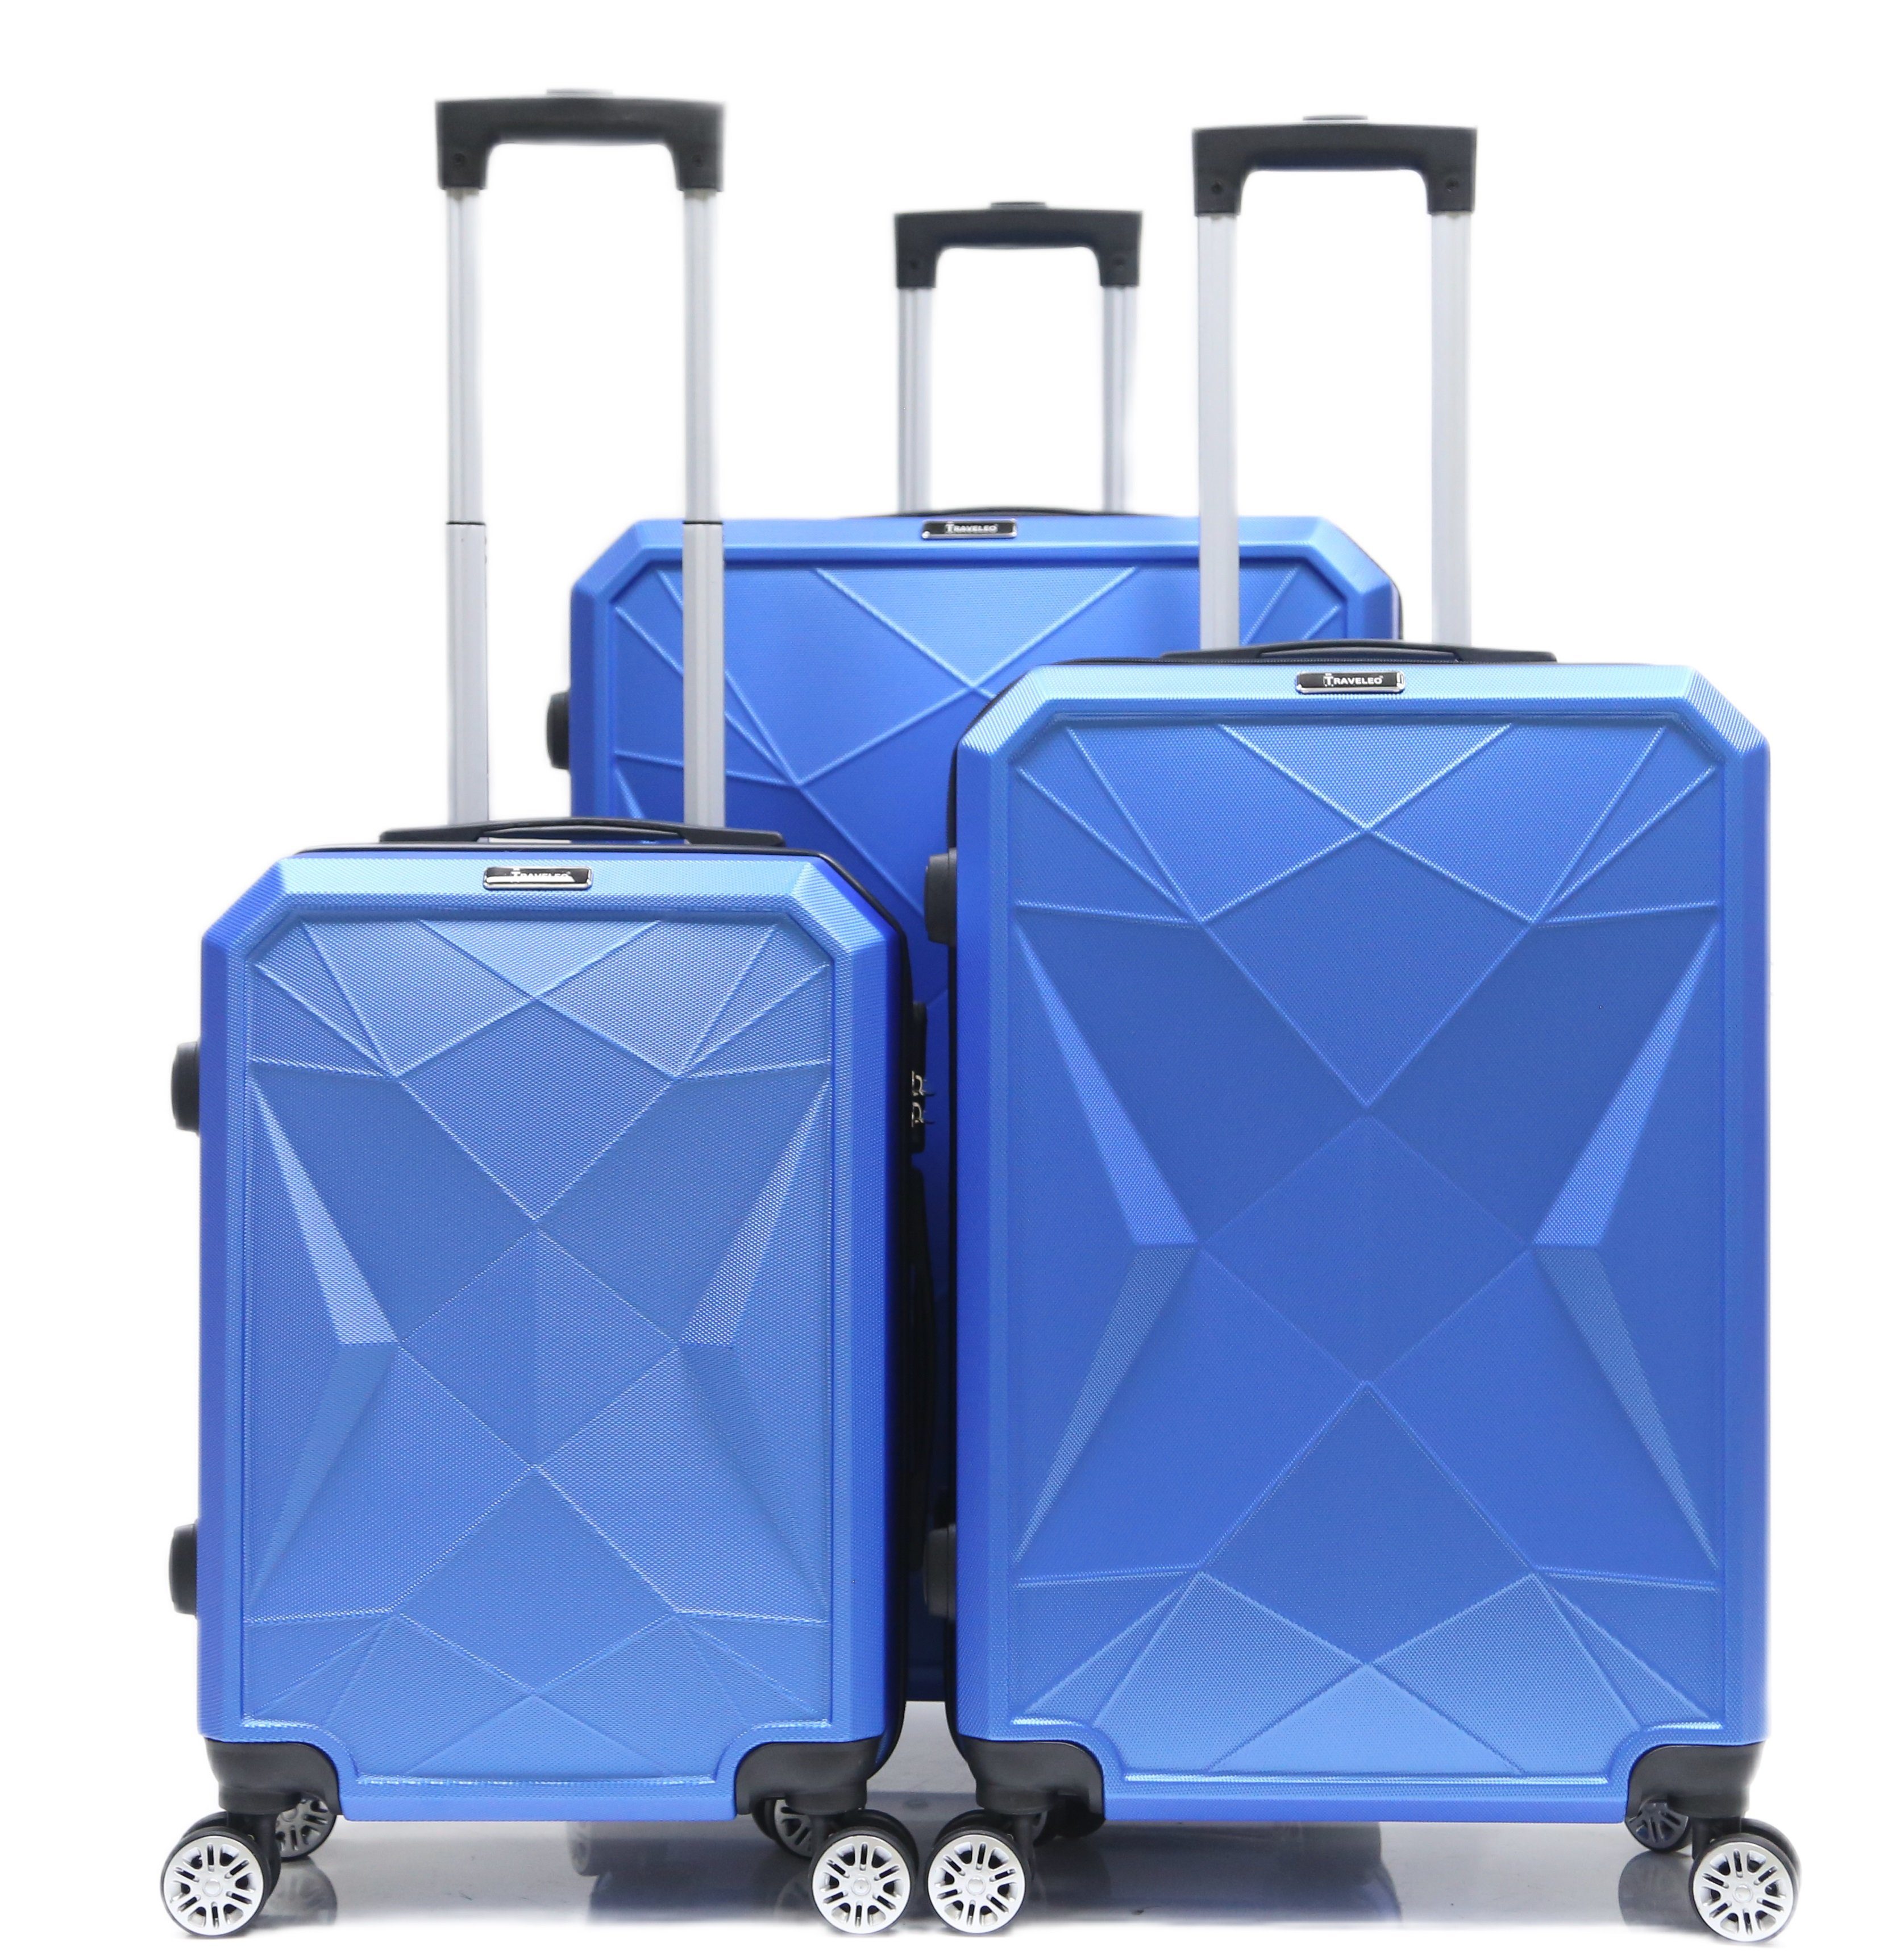 Cheffinger Kofferset Reisekoffer ABS-03 Koffer 3-teilig Hartschale Trolley Set Kofferset, 4 Rollen, (3 tlg) Blau | Trolley-Sets